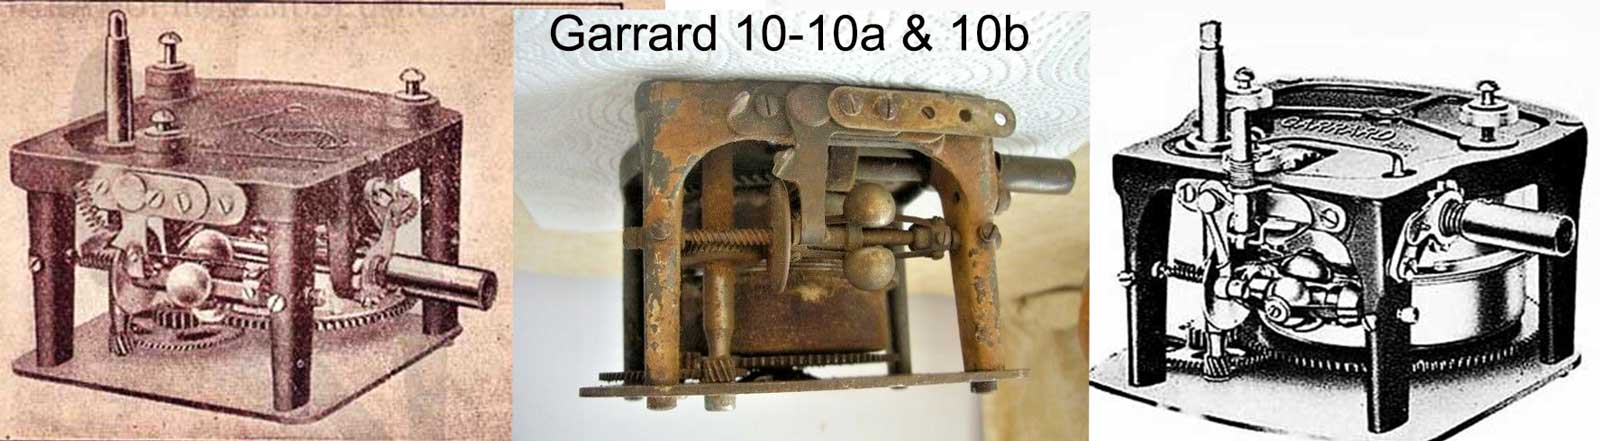 Garrard 10 variants